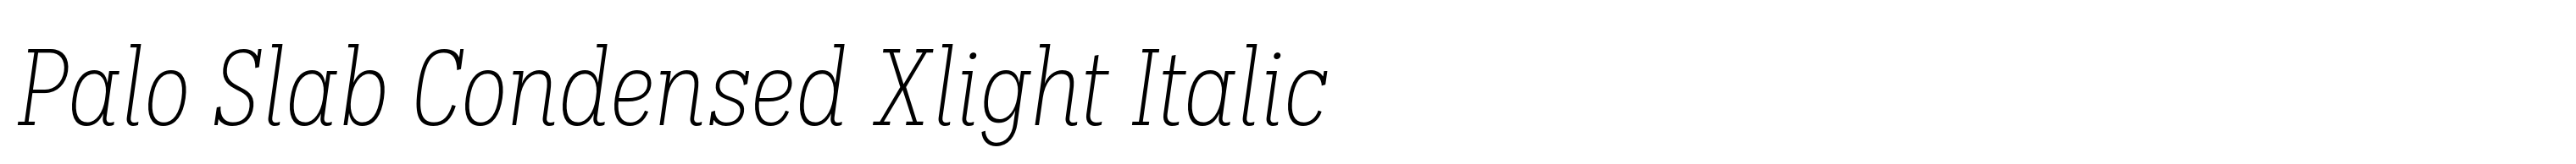 Palo Slab Condensed Xlight Italic